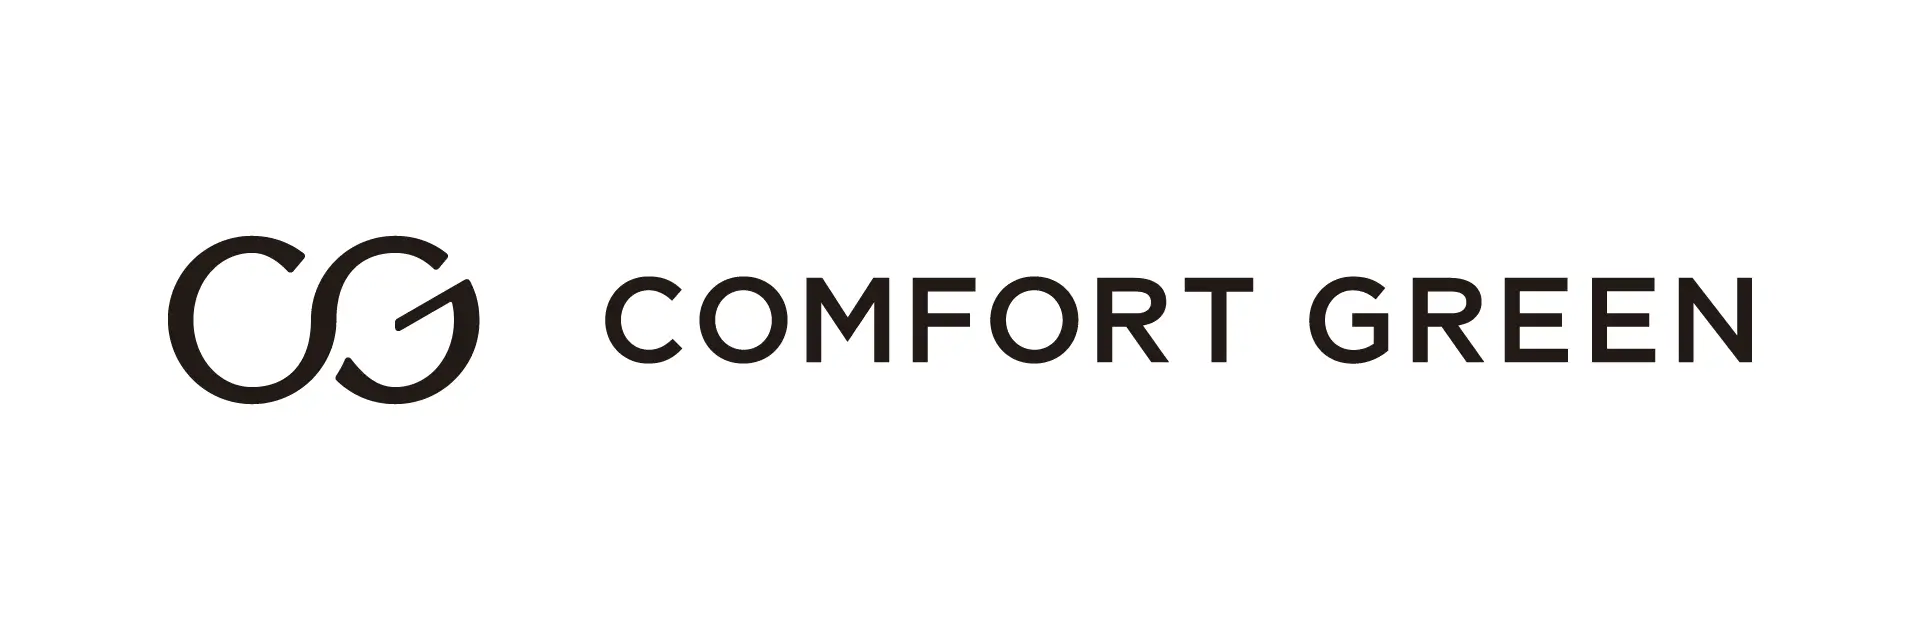 Comfort Green - Logo